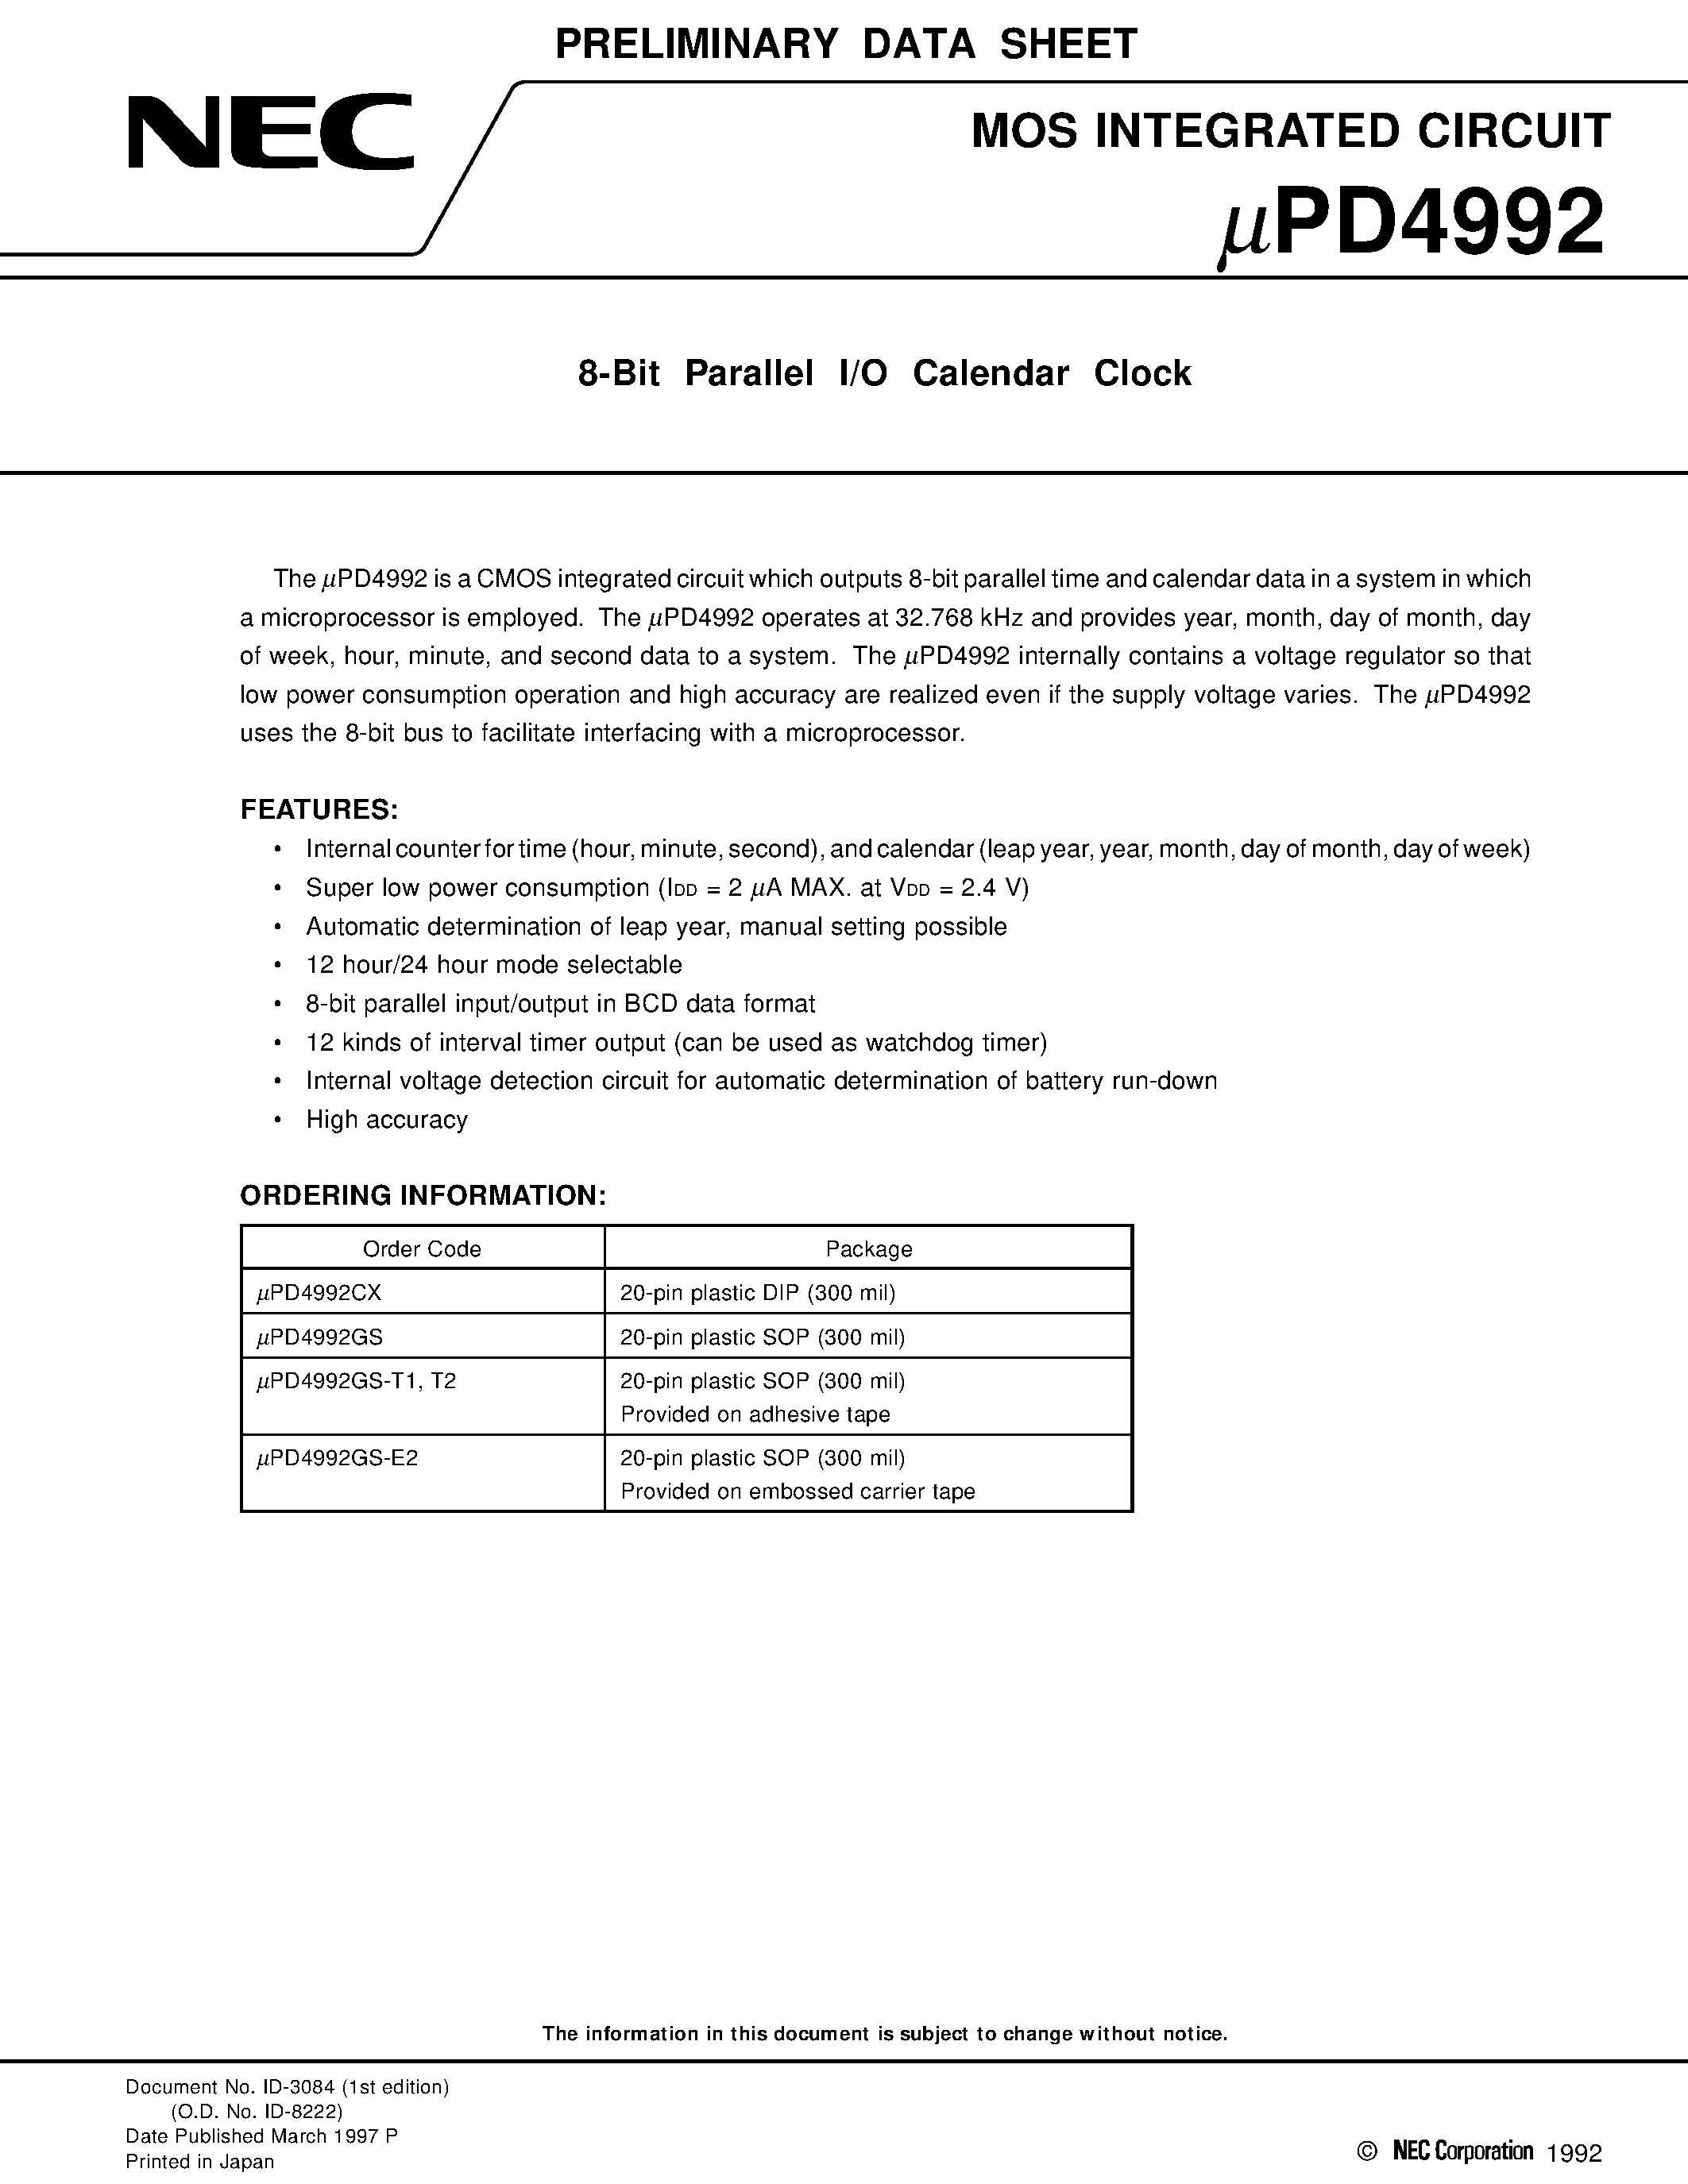 Datasheet UPD4992CX - 8-Bit Parallel I/O Calendar Clock page 1